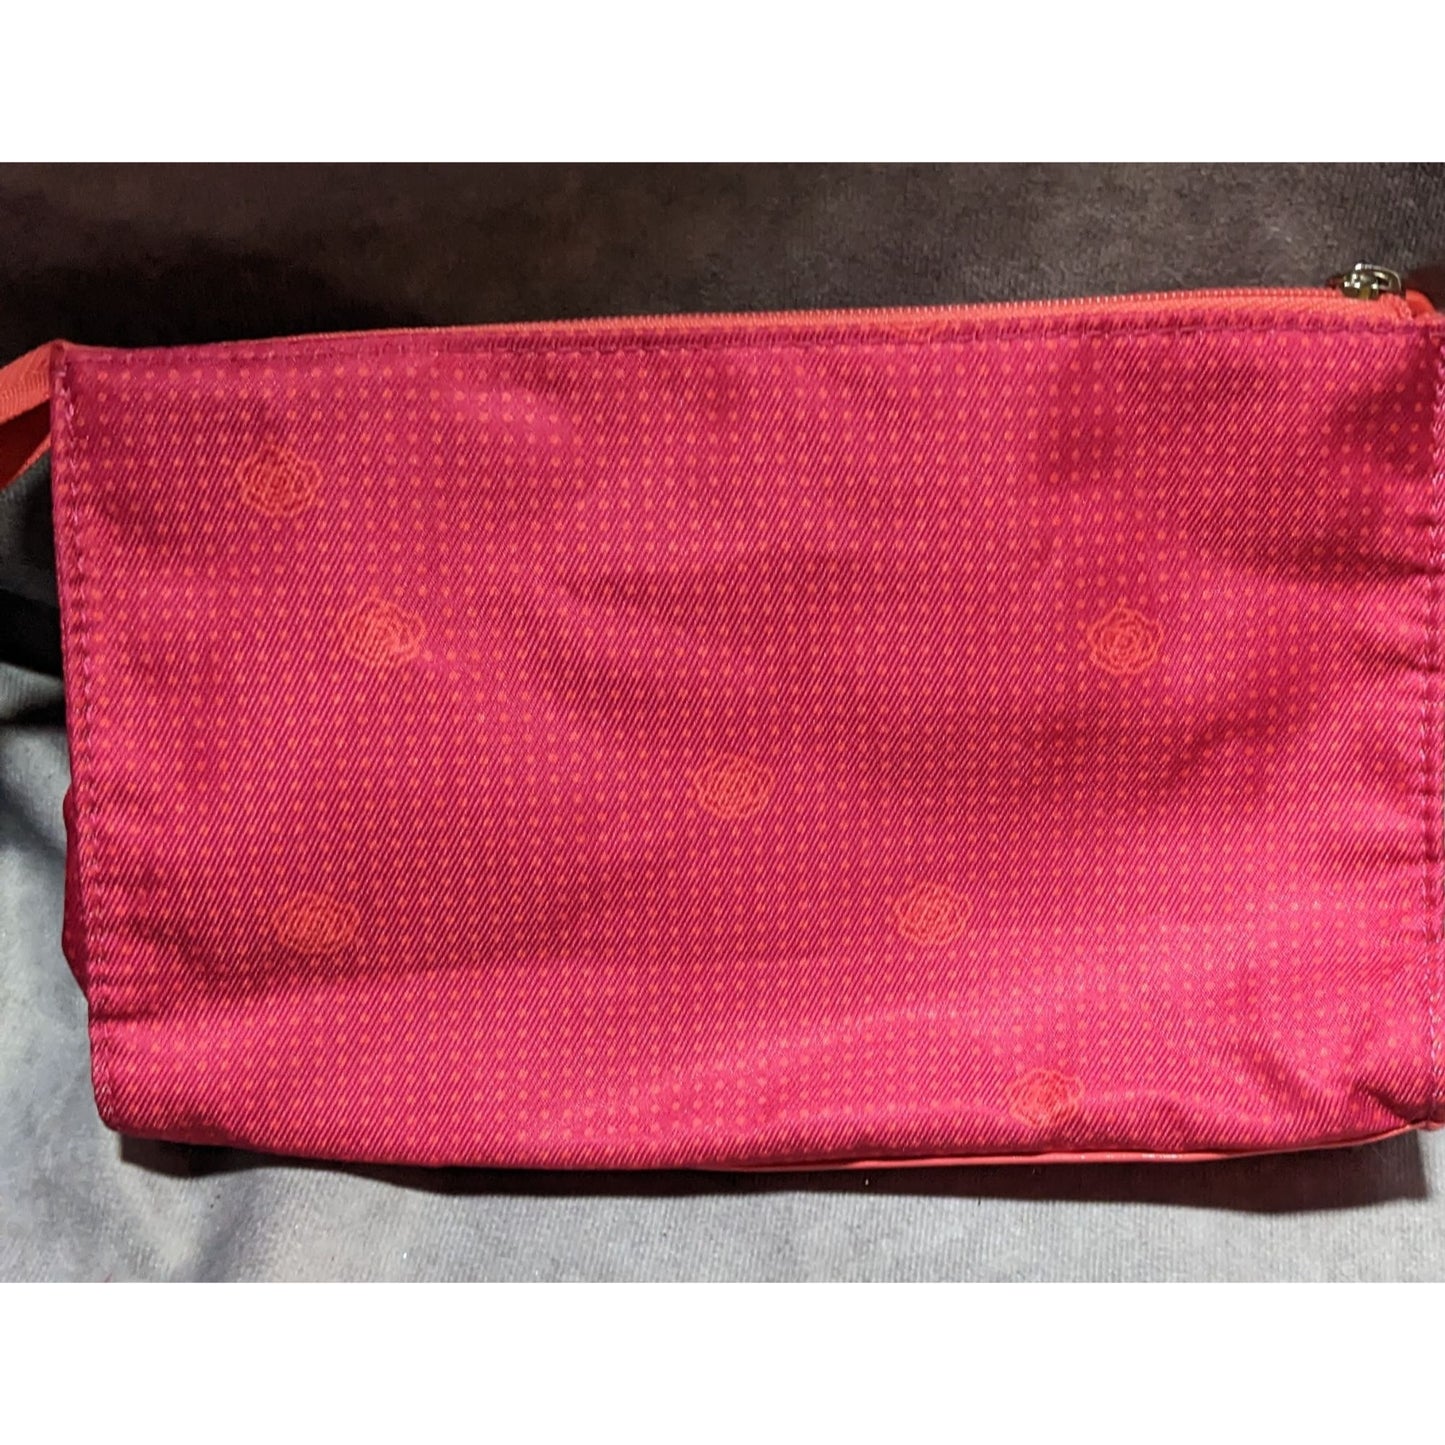 Lancome Paris Pink Floral Cosmetic Bag